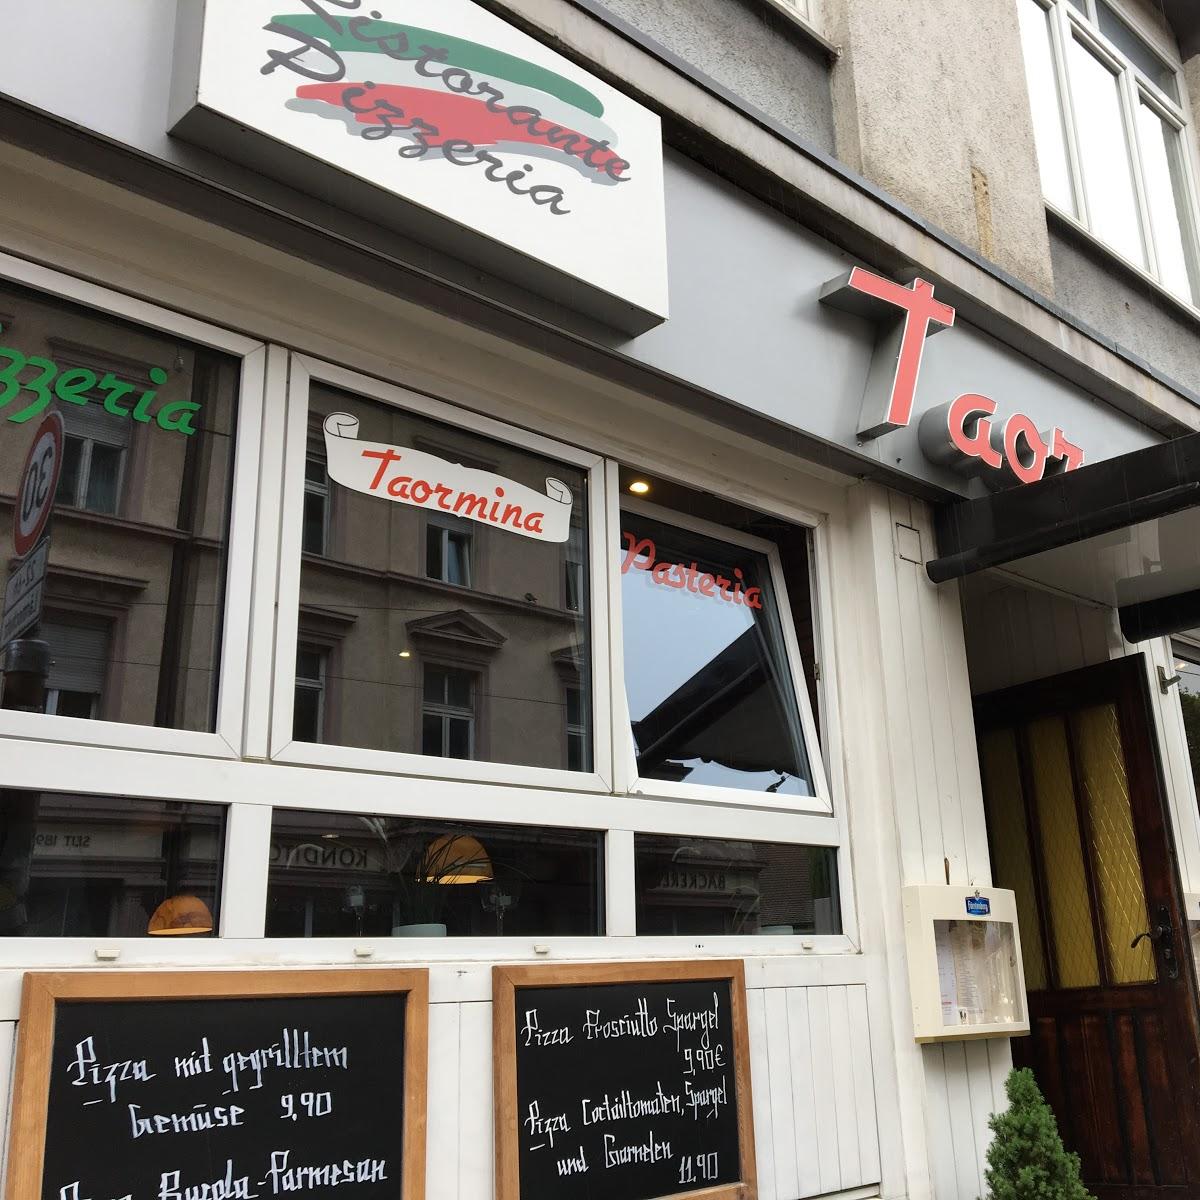 Restaurant "Pizzeria Taormina" in Freiburg im Breisgau